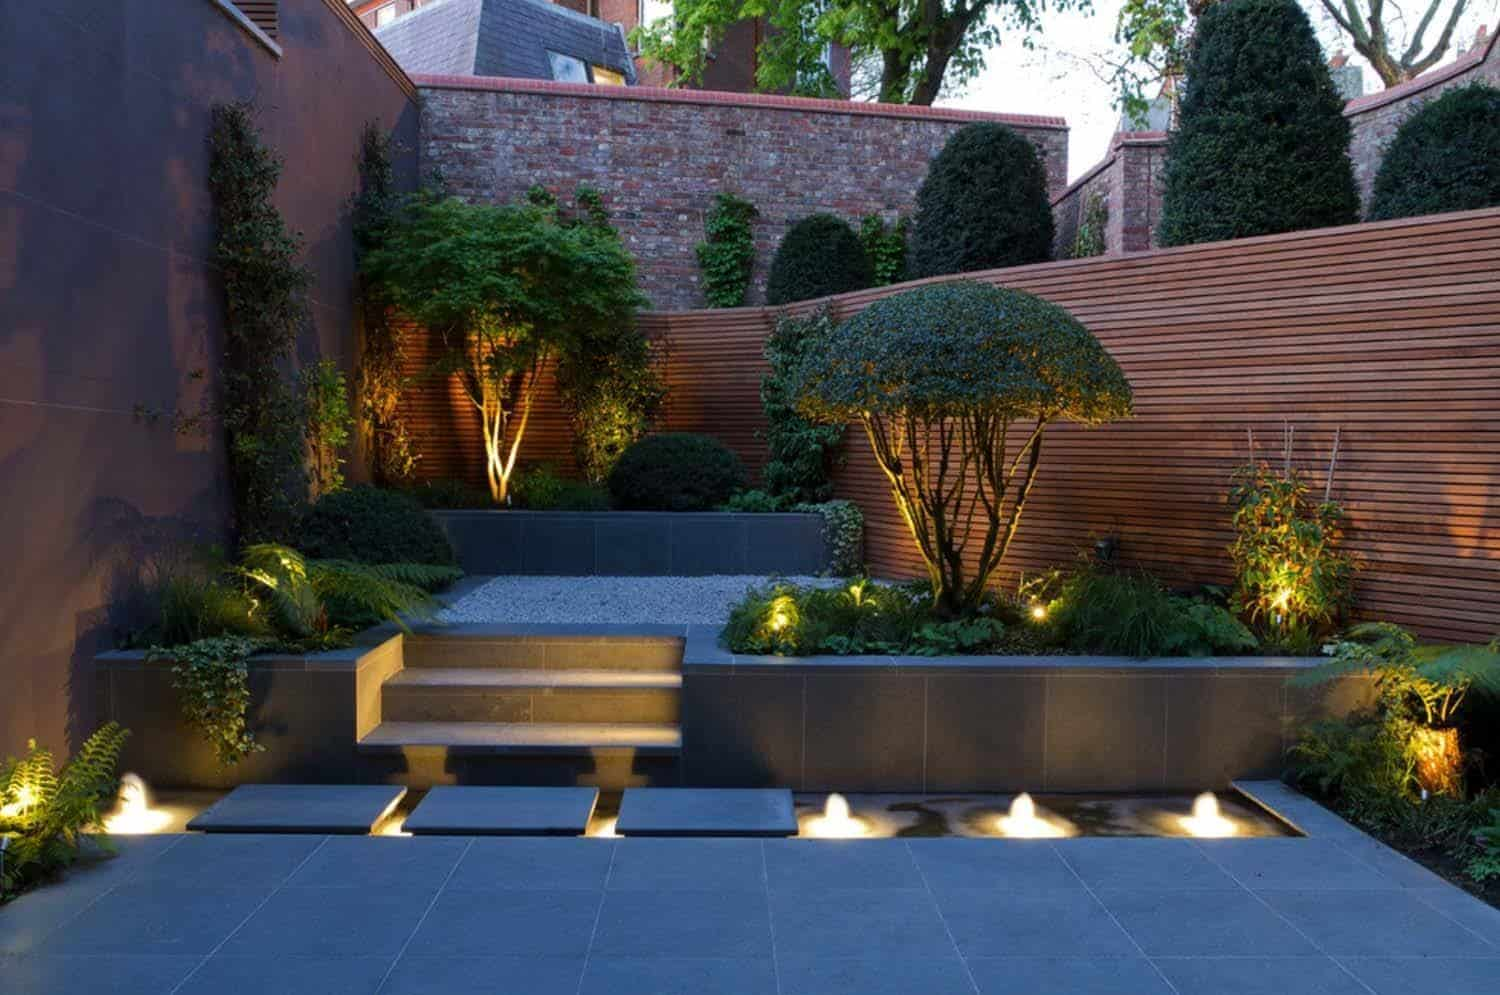  20 Modern Backyard Ideas for Landscaping and Garden Designs